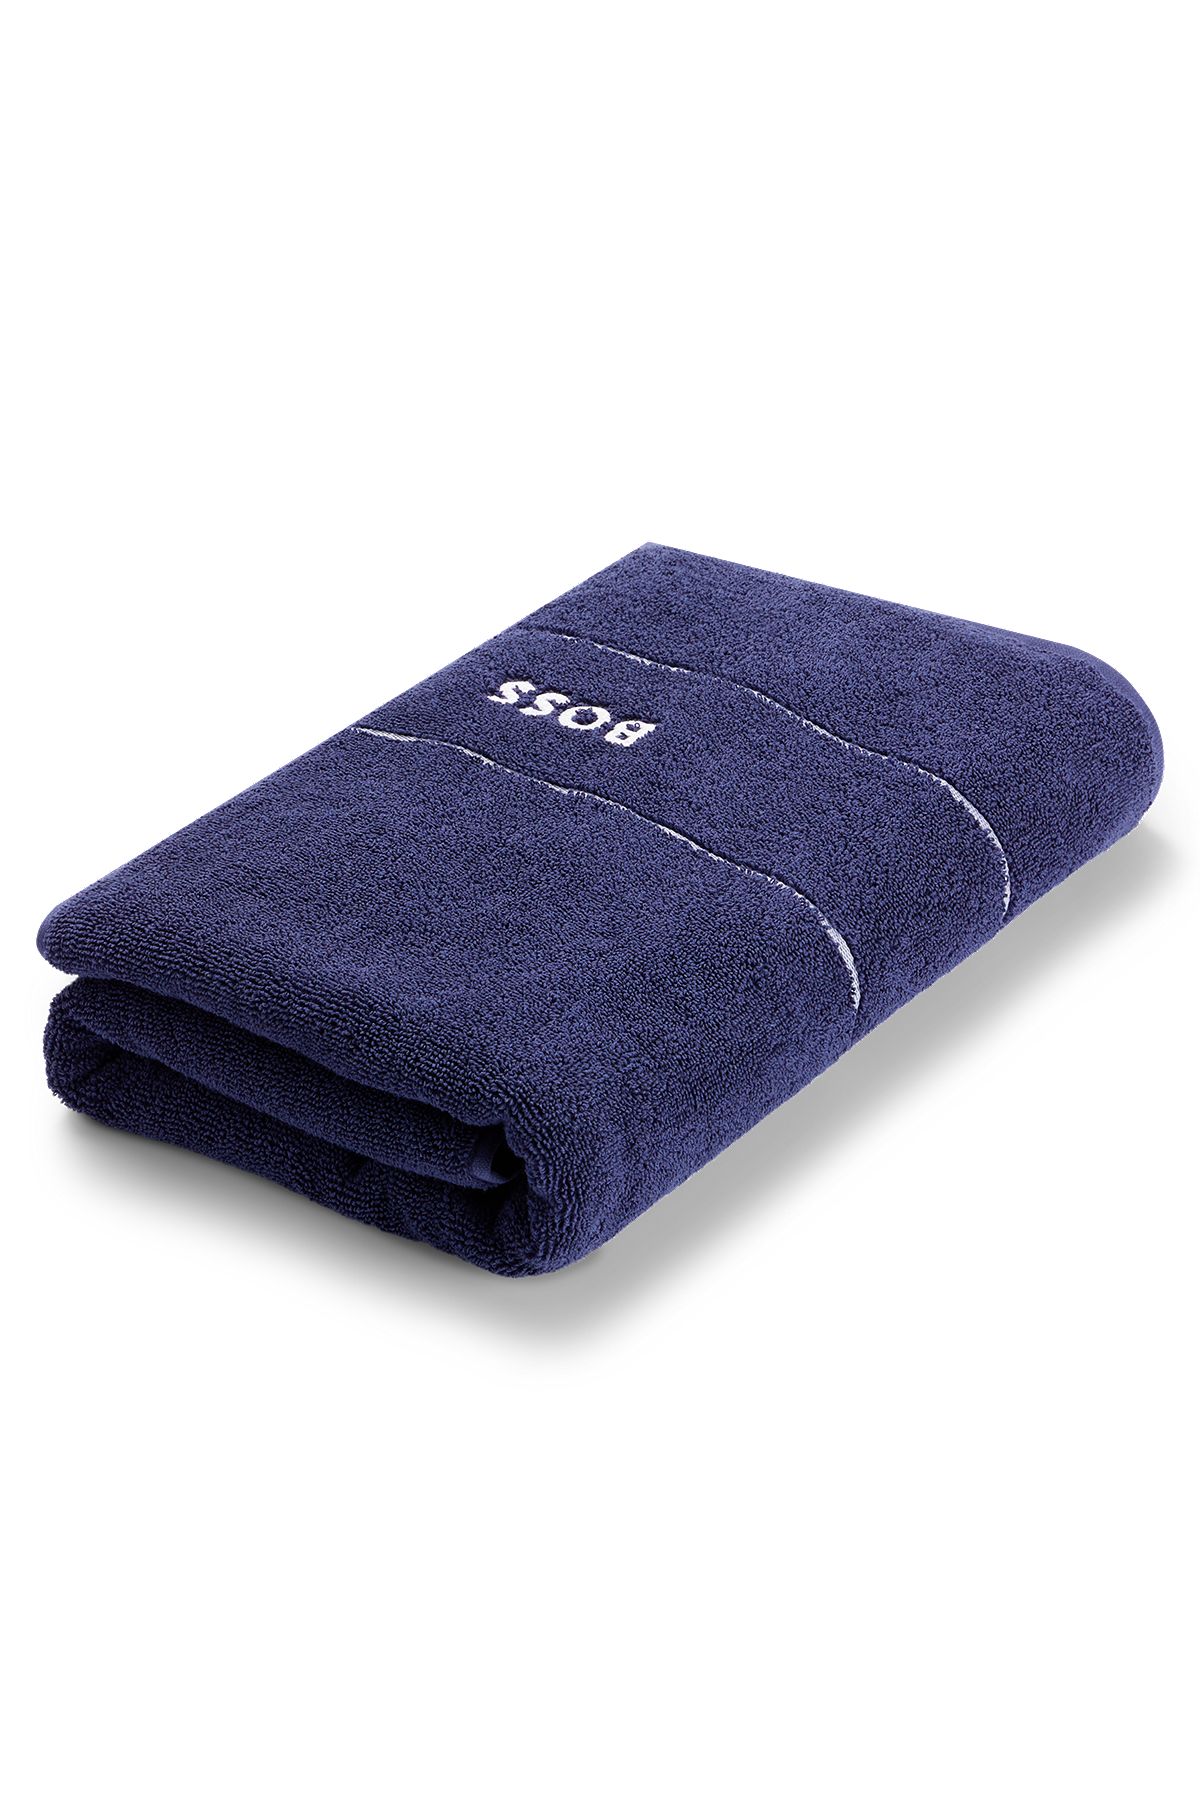 Cotton bath towel with white logo embroidery, Dark Blue